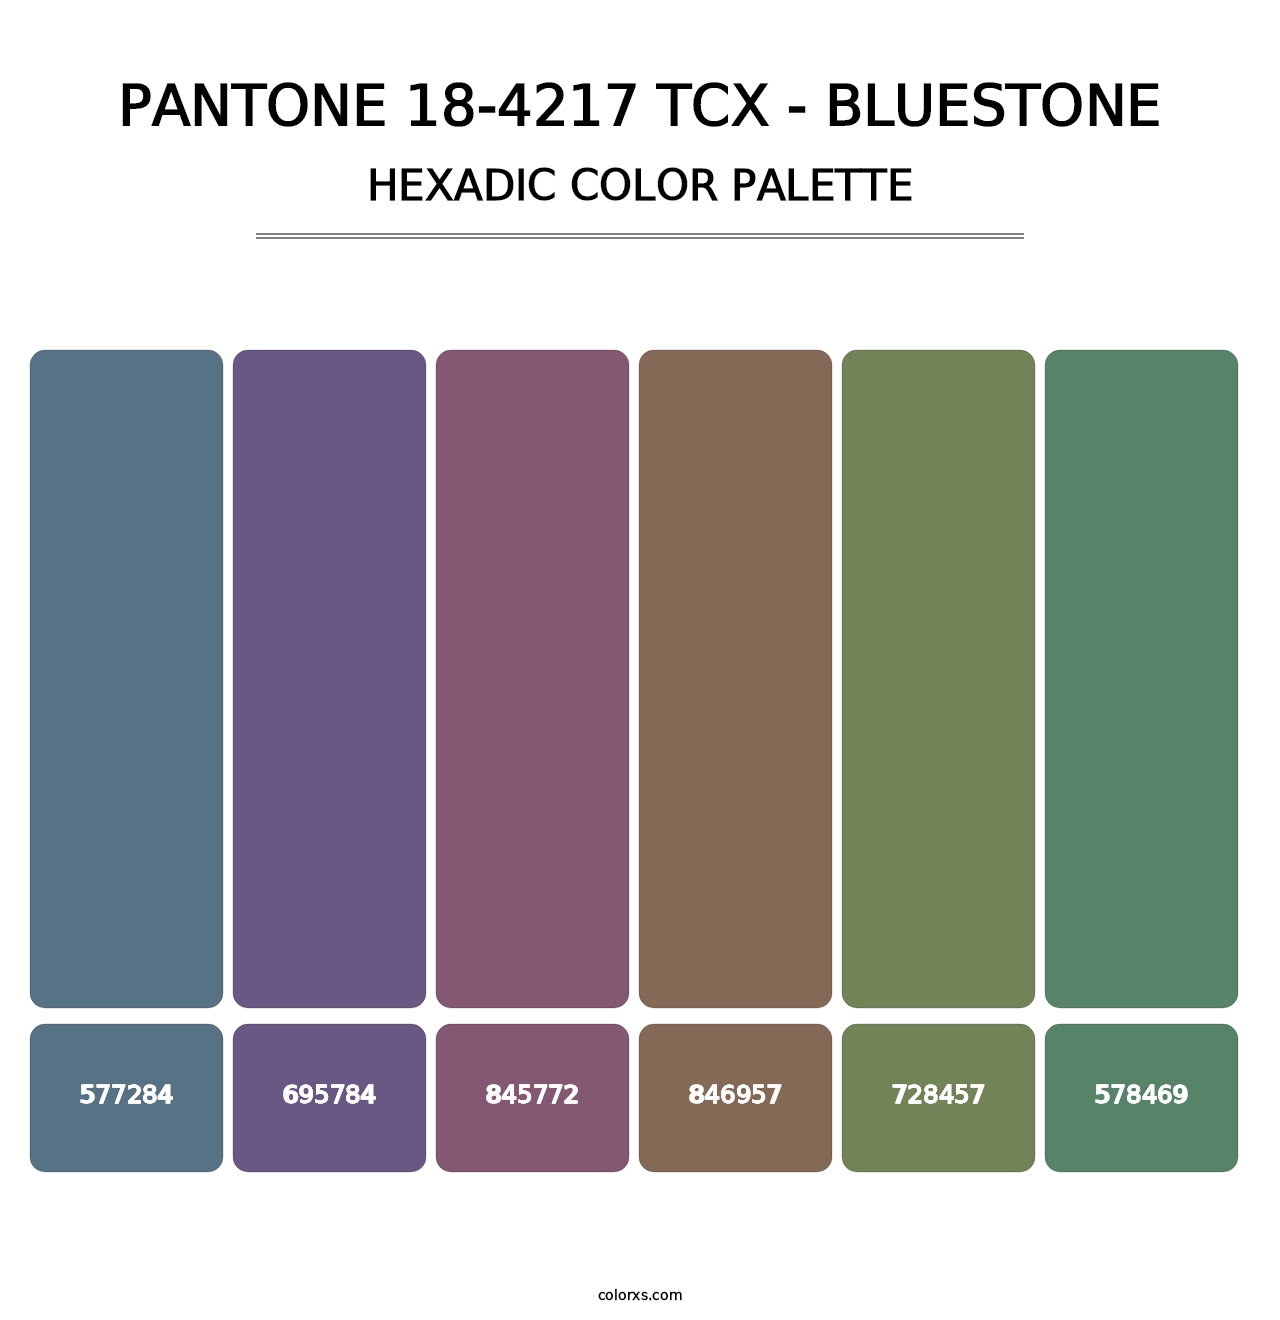 PANTONE 18-4217 TCX - Bluestone - Hexadic Color Palette